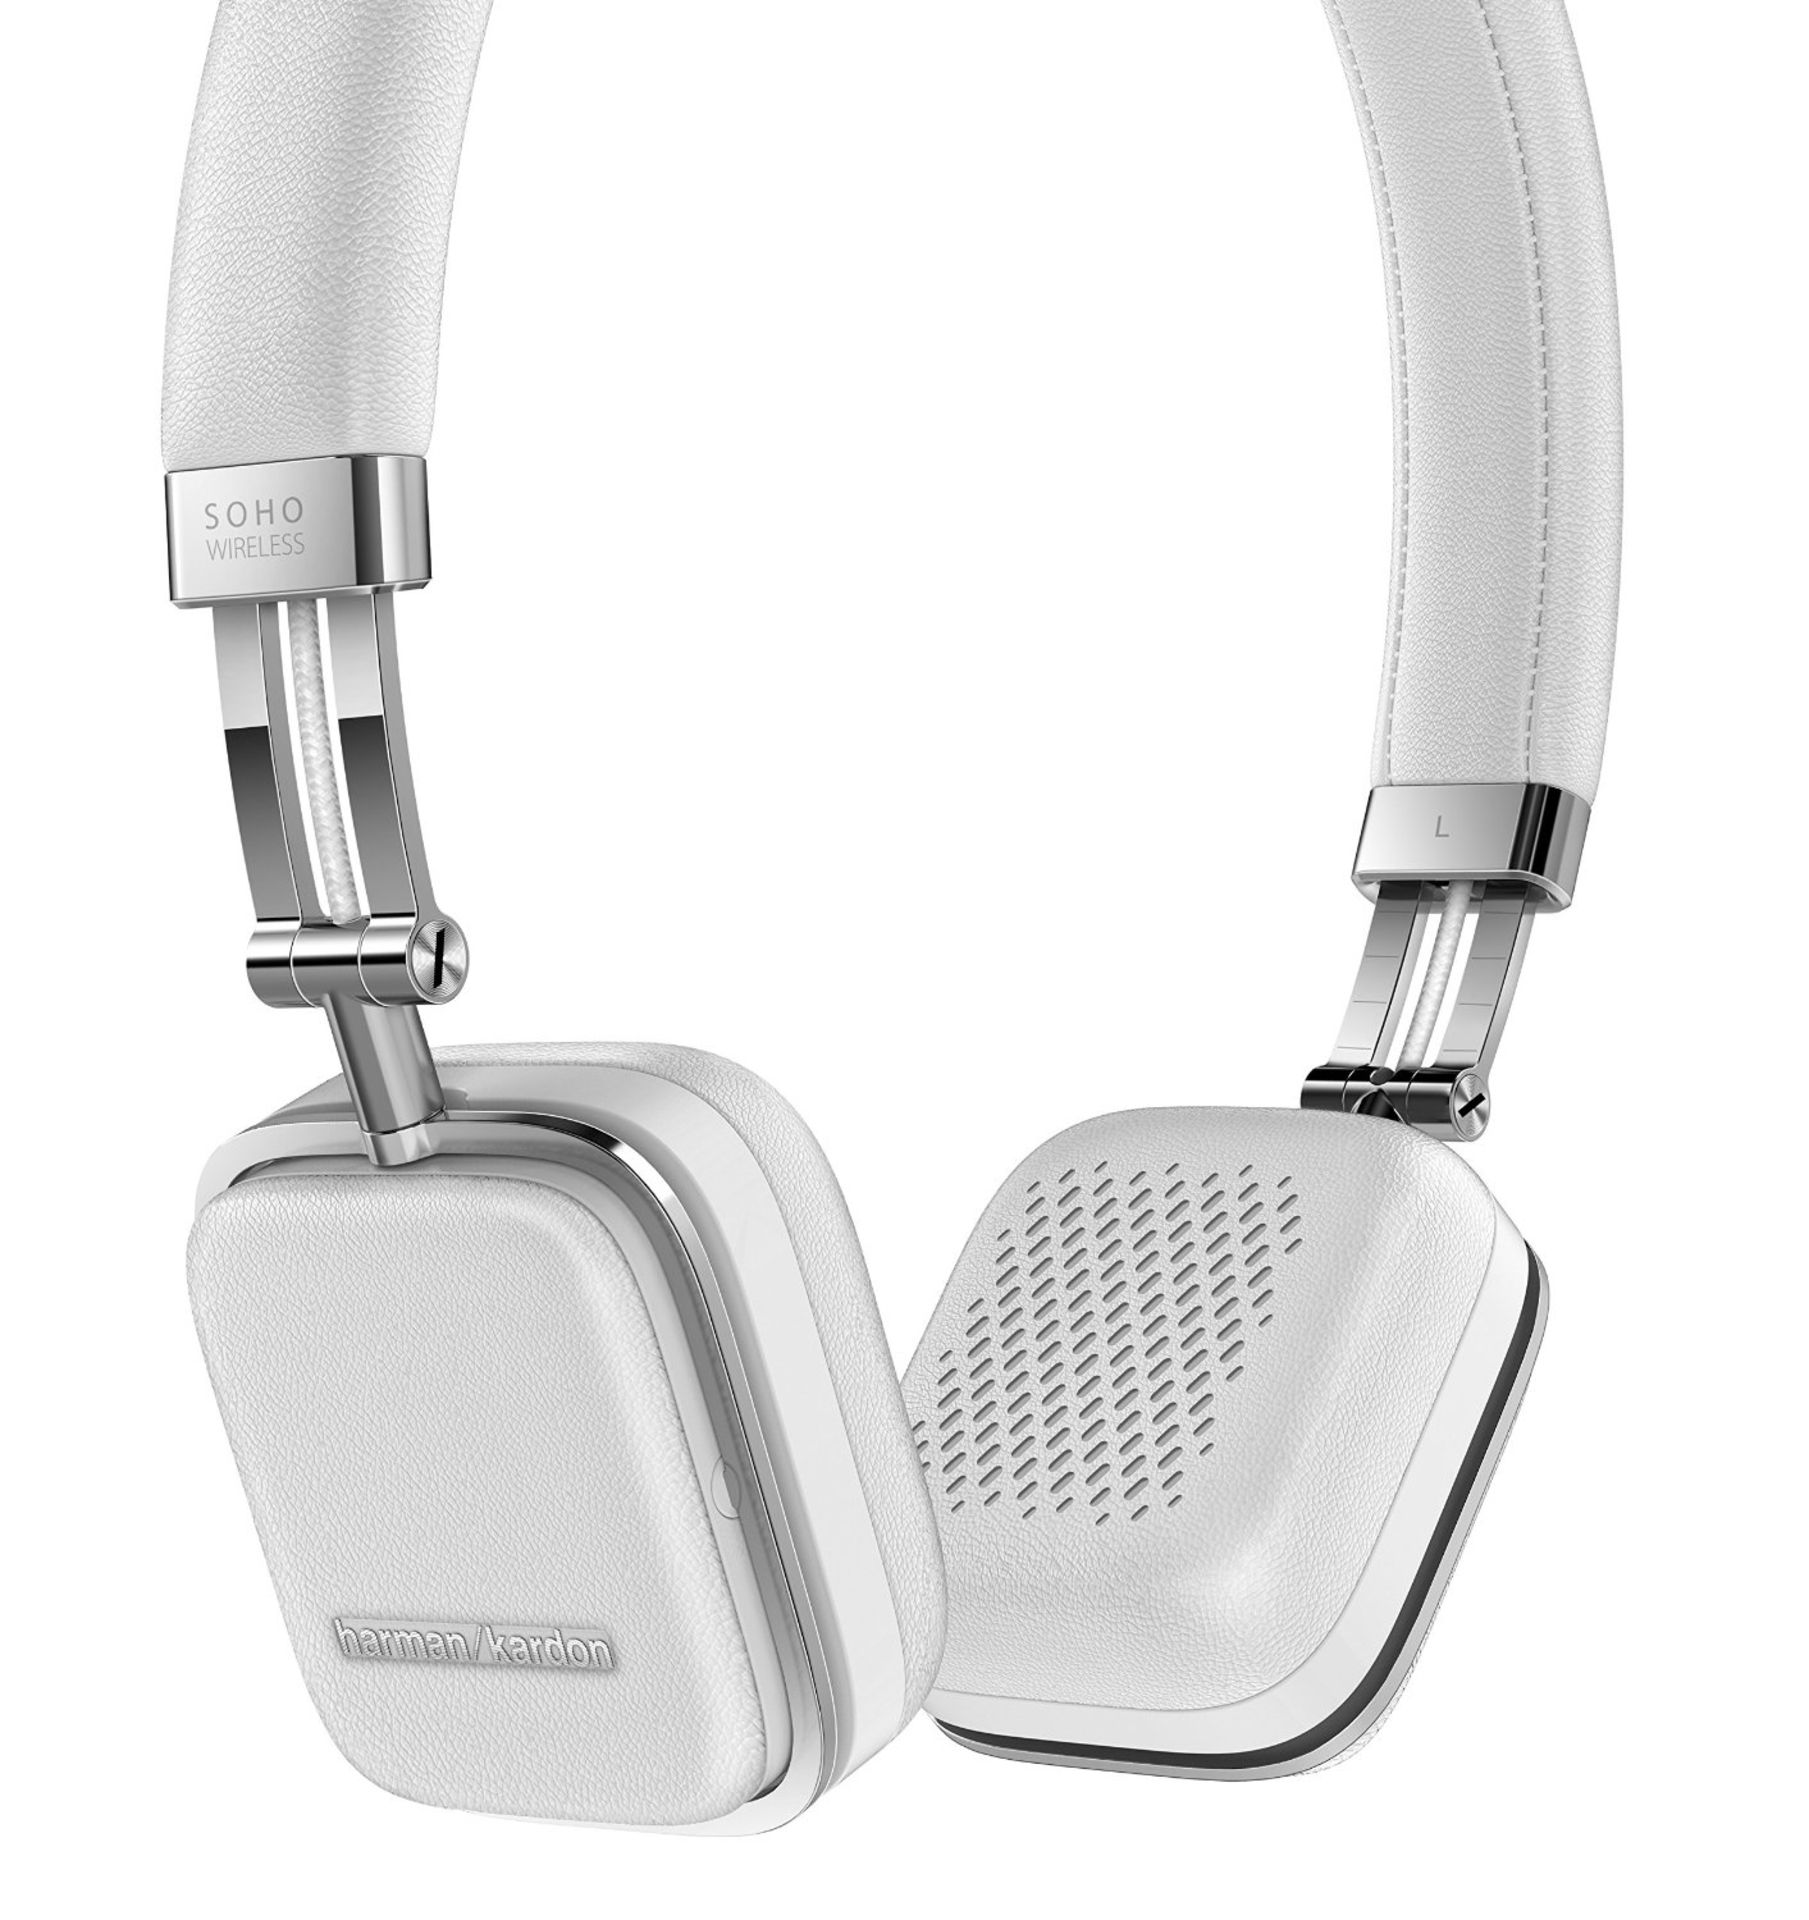 V *TRADE QTY* Brand New Harman Kardon Soho On Ear Wireless Headphones In White RRP:£249.99 Amazon - Image 2 of 2